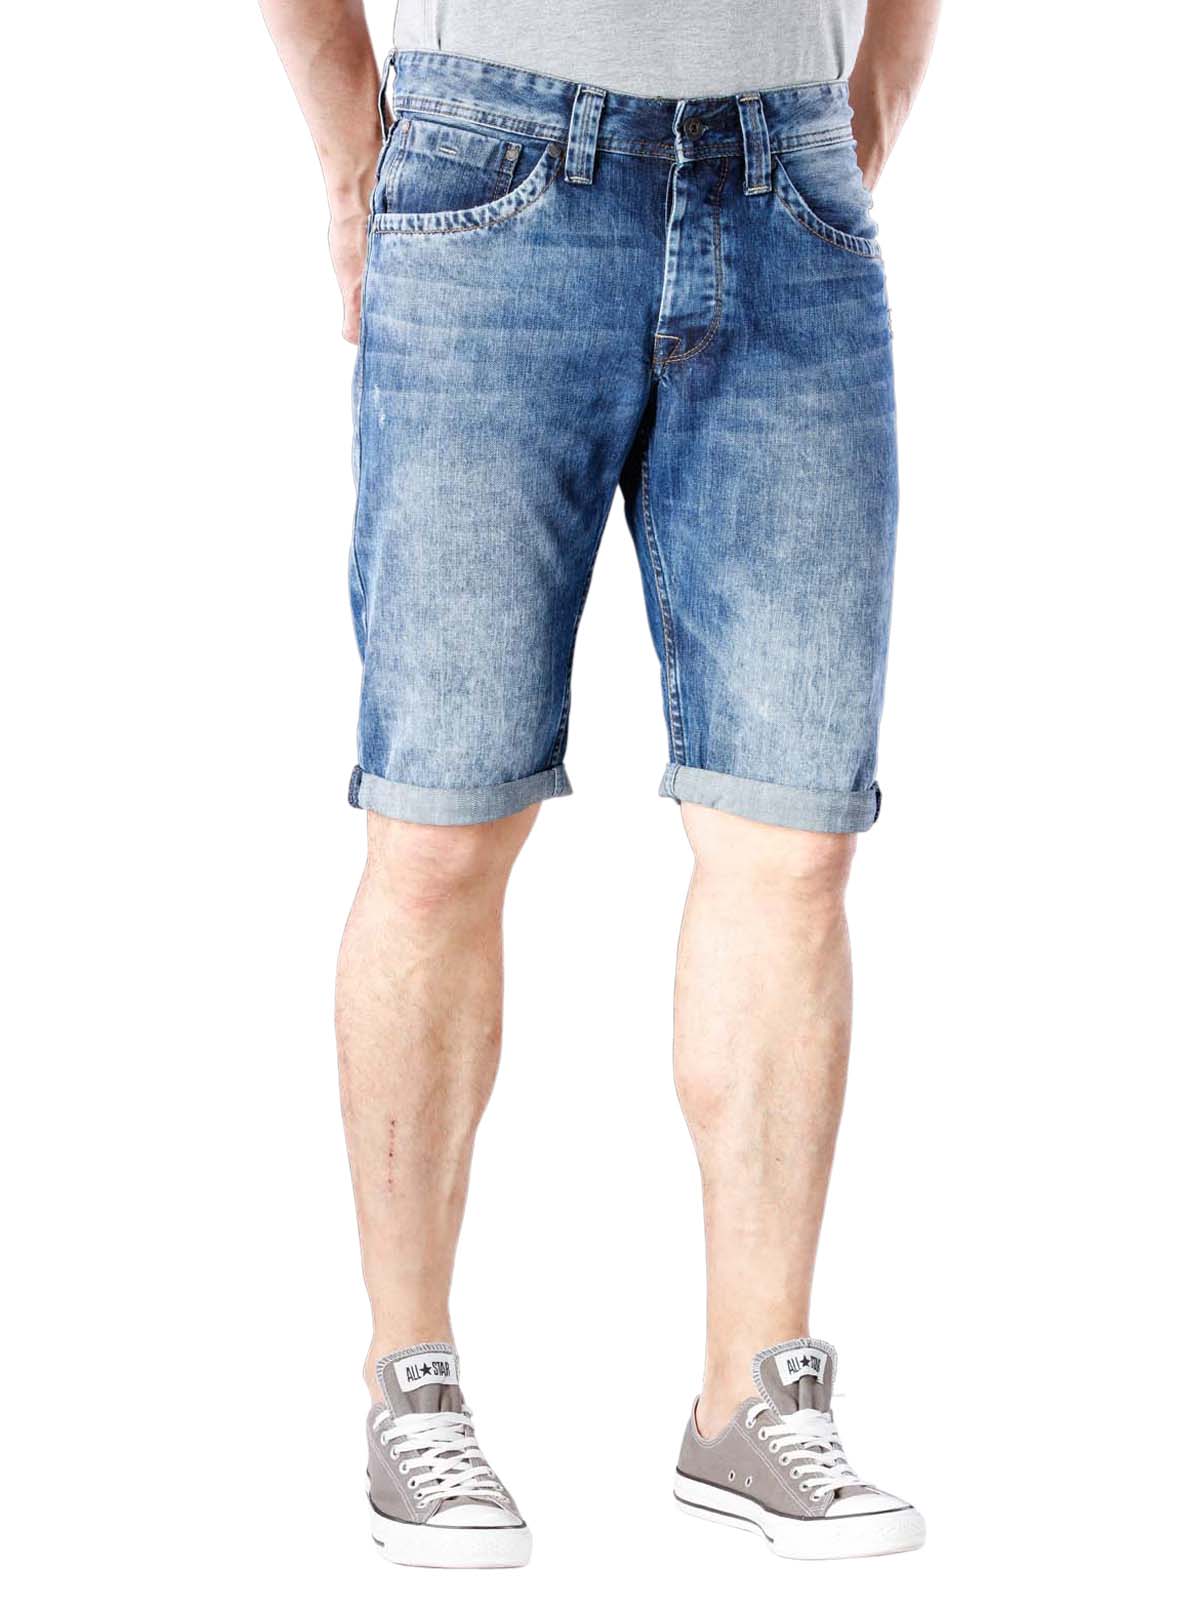 pepe jean shorts